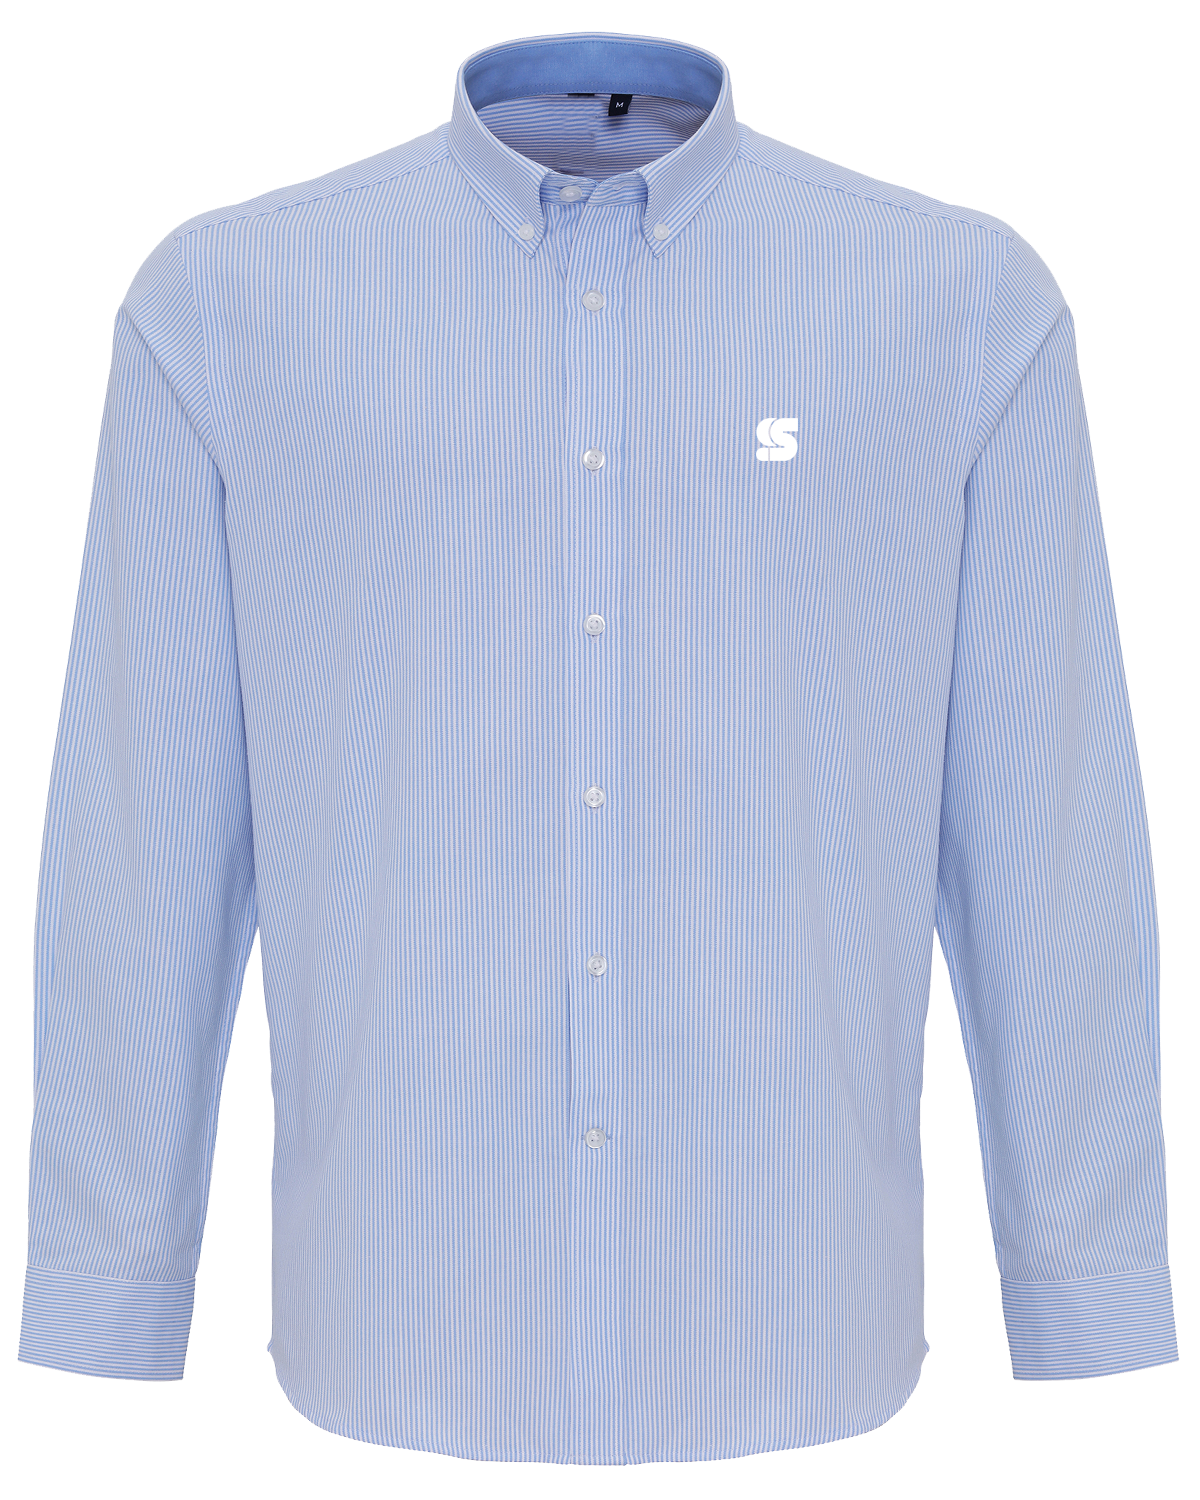 Blue Striped Shirt / S Logo White Embroidered Men